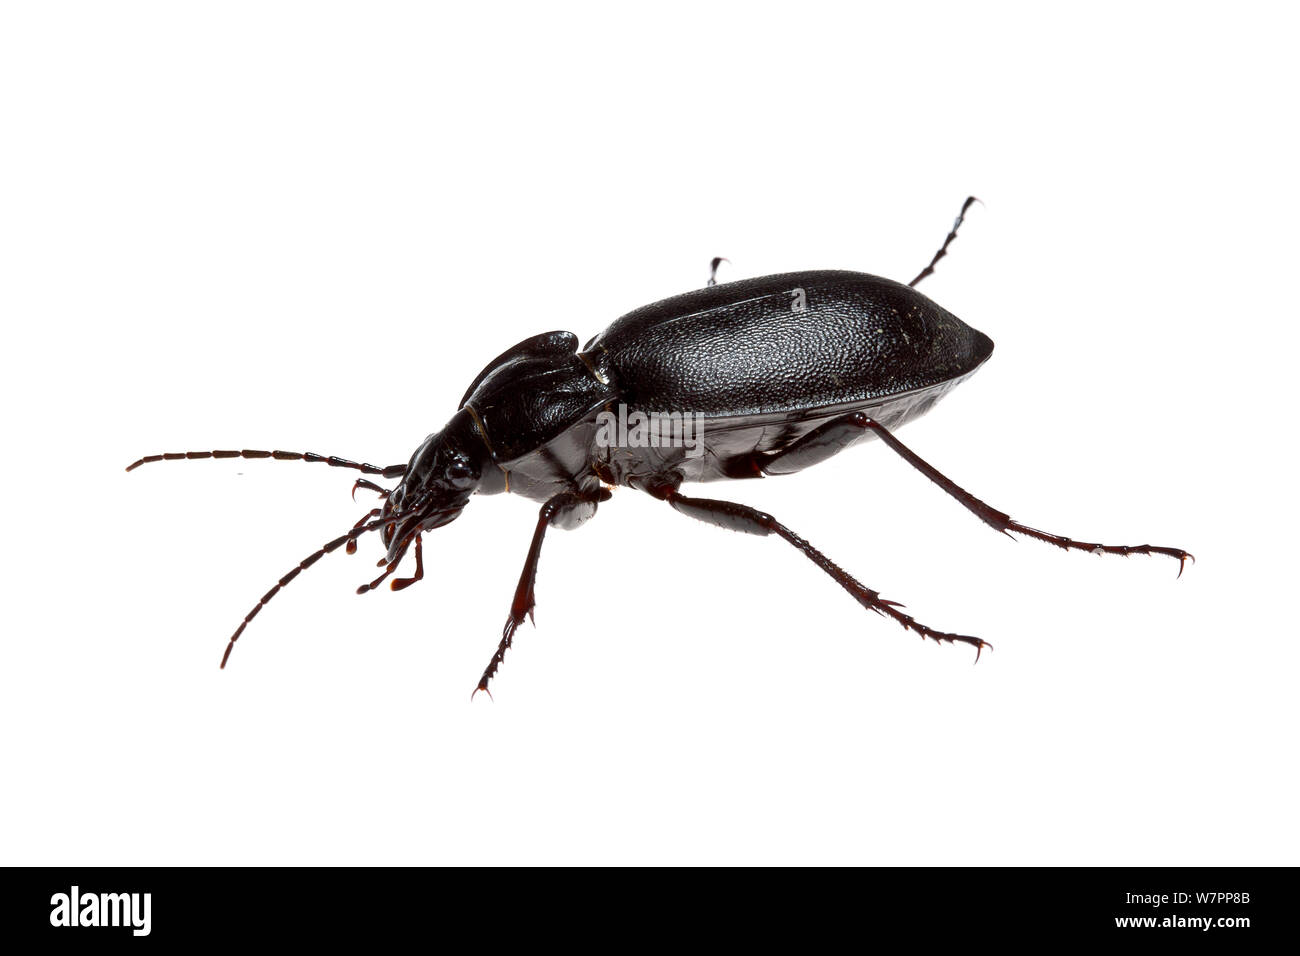 The Cretan endemic ground beetle (Carabus banoni), Heraklion, Crete, Greece meetyourneighbours.net project Stock Photo